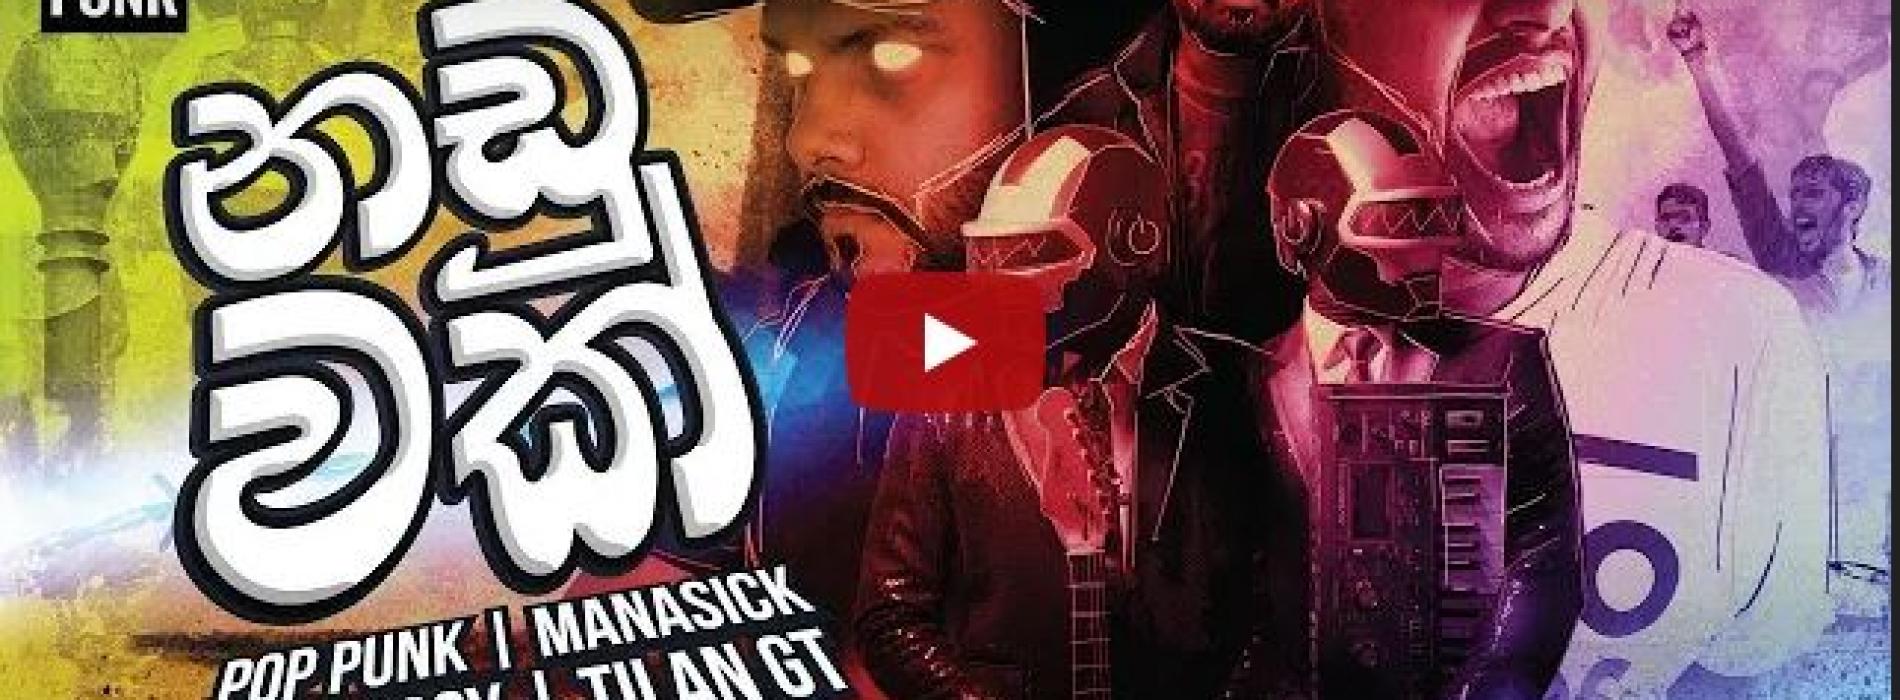 New Music : Pop Punk – Naduwak (Mal Kalawata Wirodhai) [Lyric Video] [feat Manasick, BigDoggy & Tilan GT]